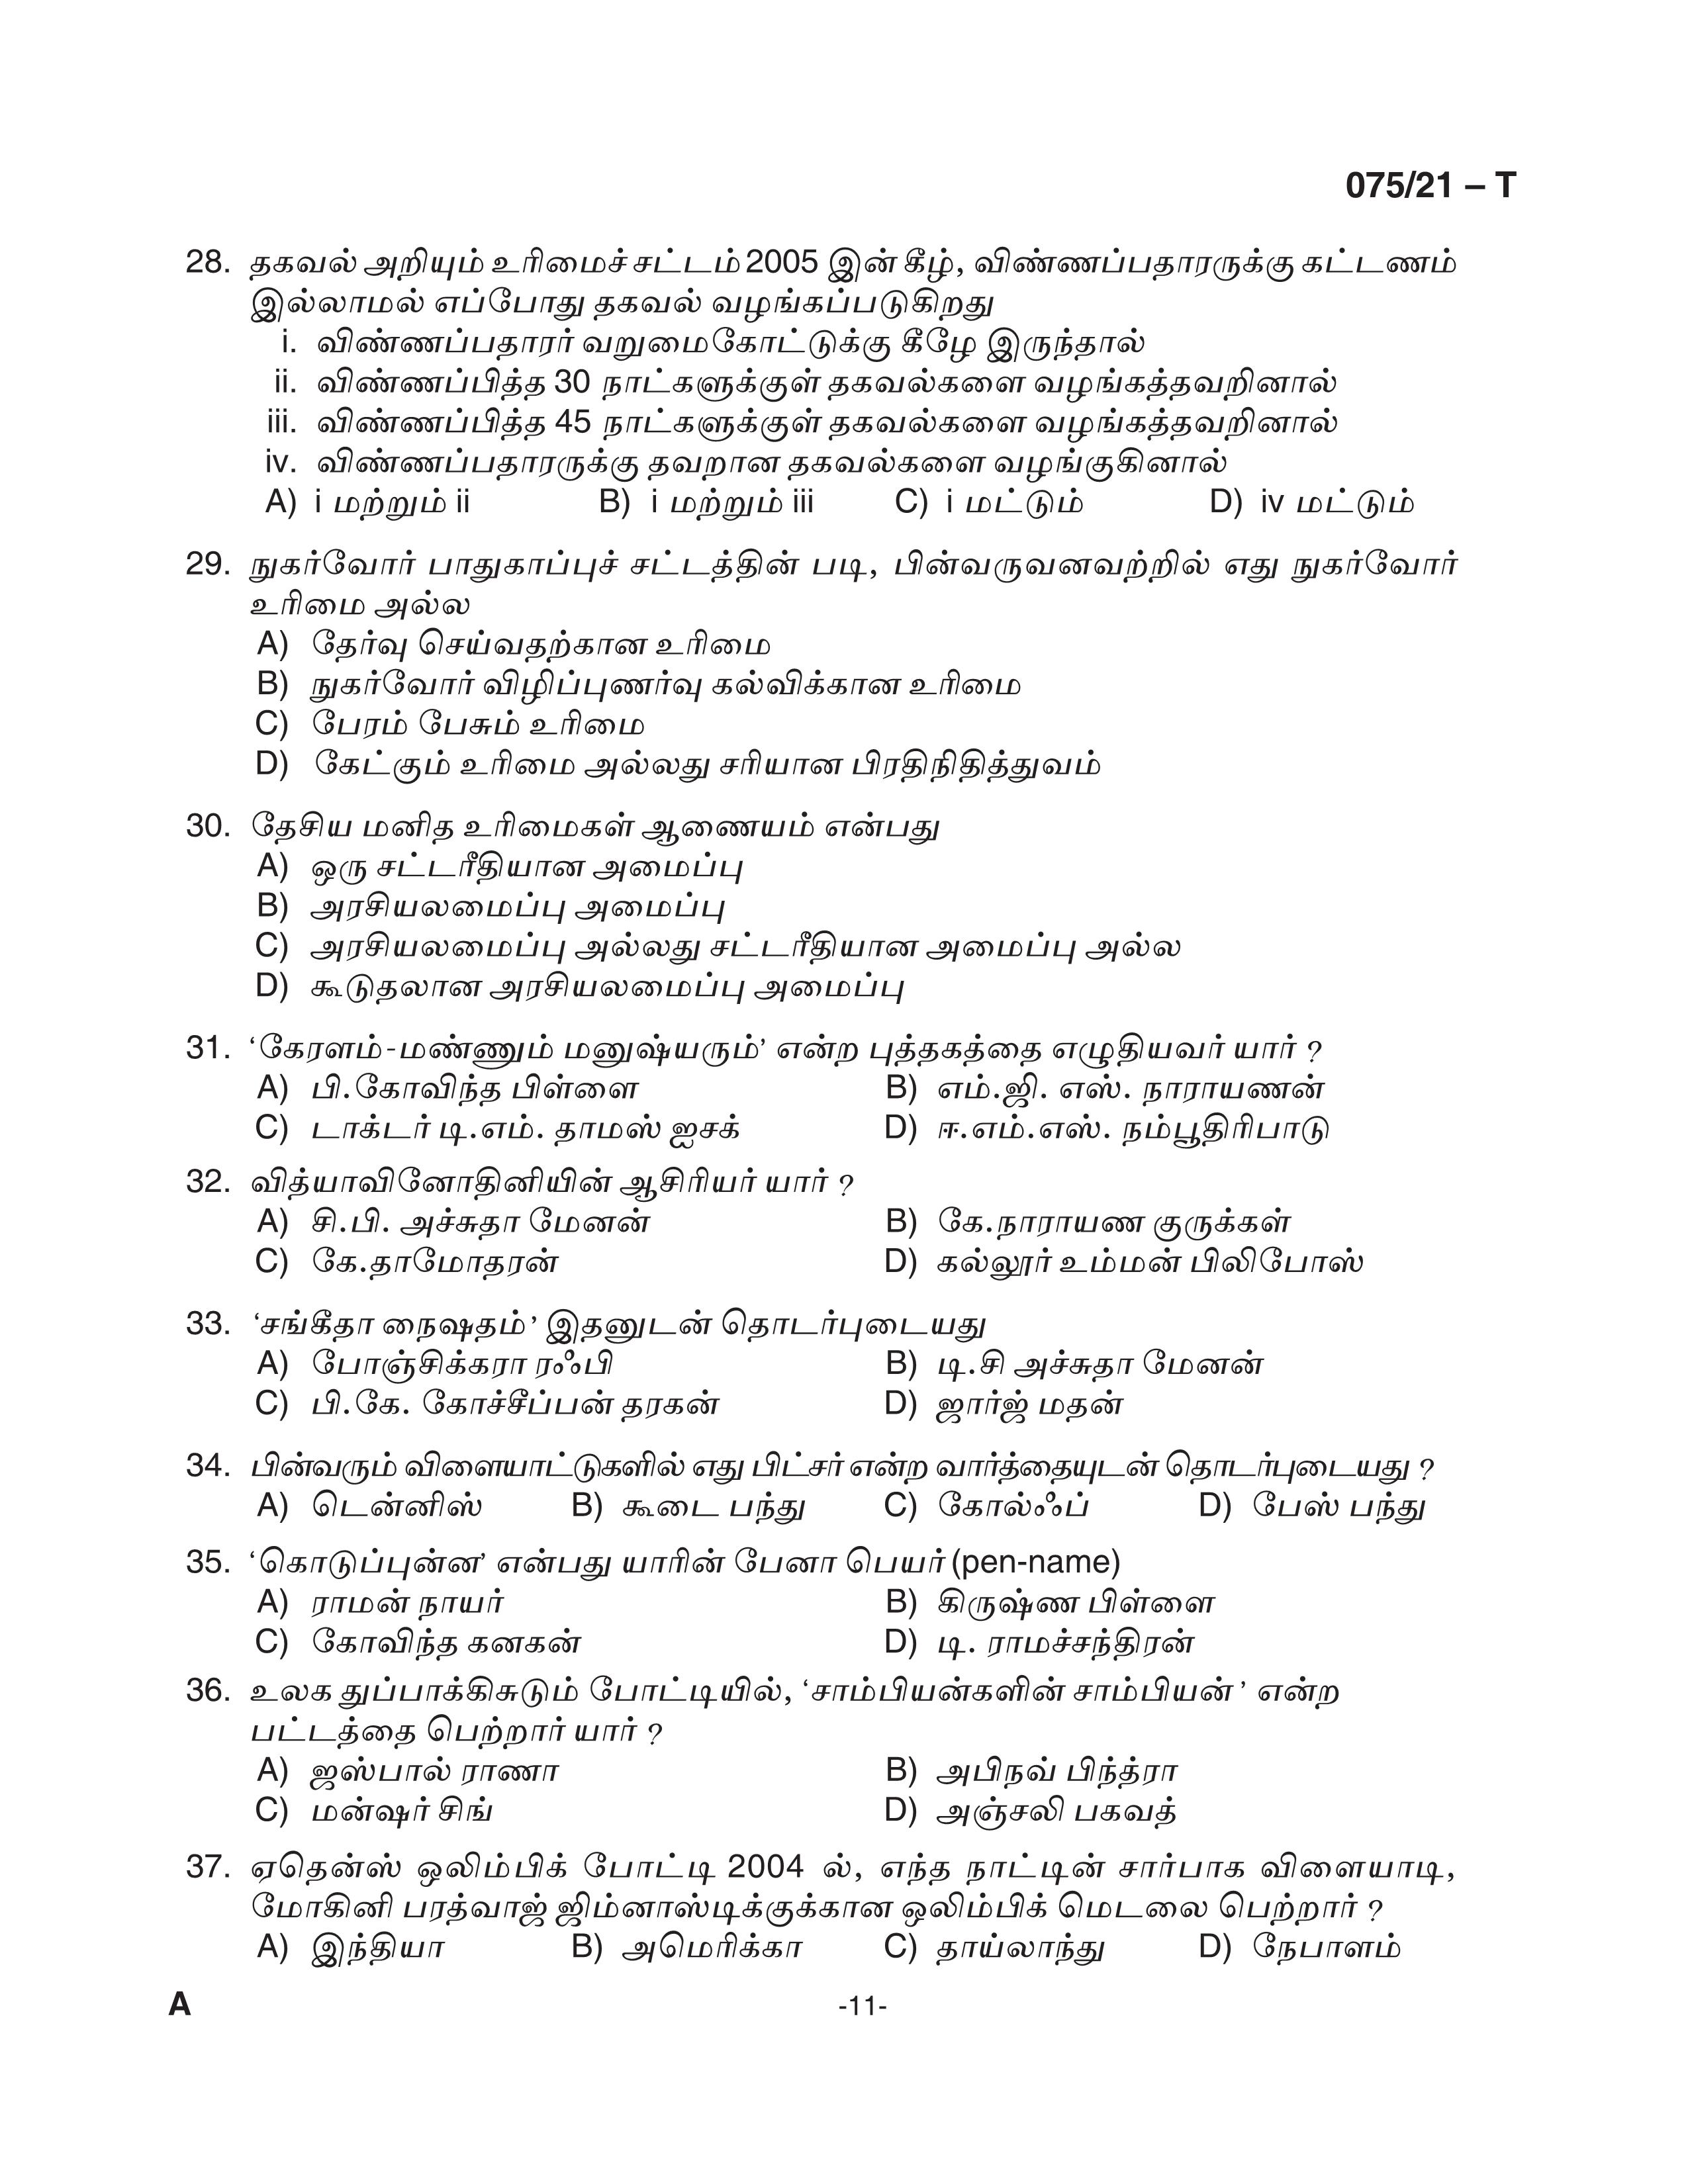 KPSC Degree Level Preliminary Exam Stage I Tamil 2021 Code 07521 T 11